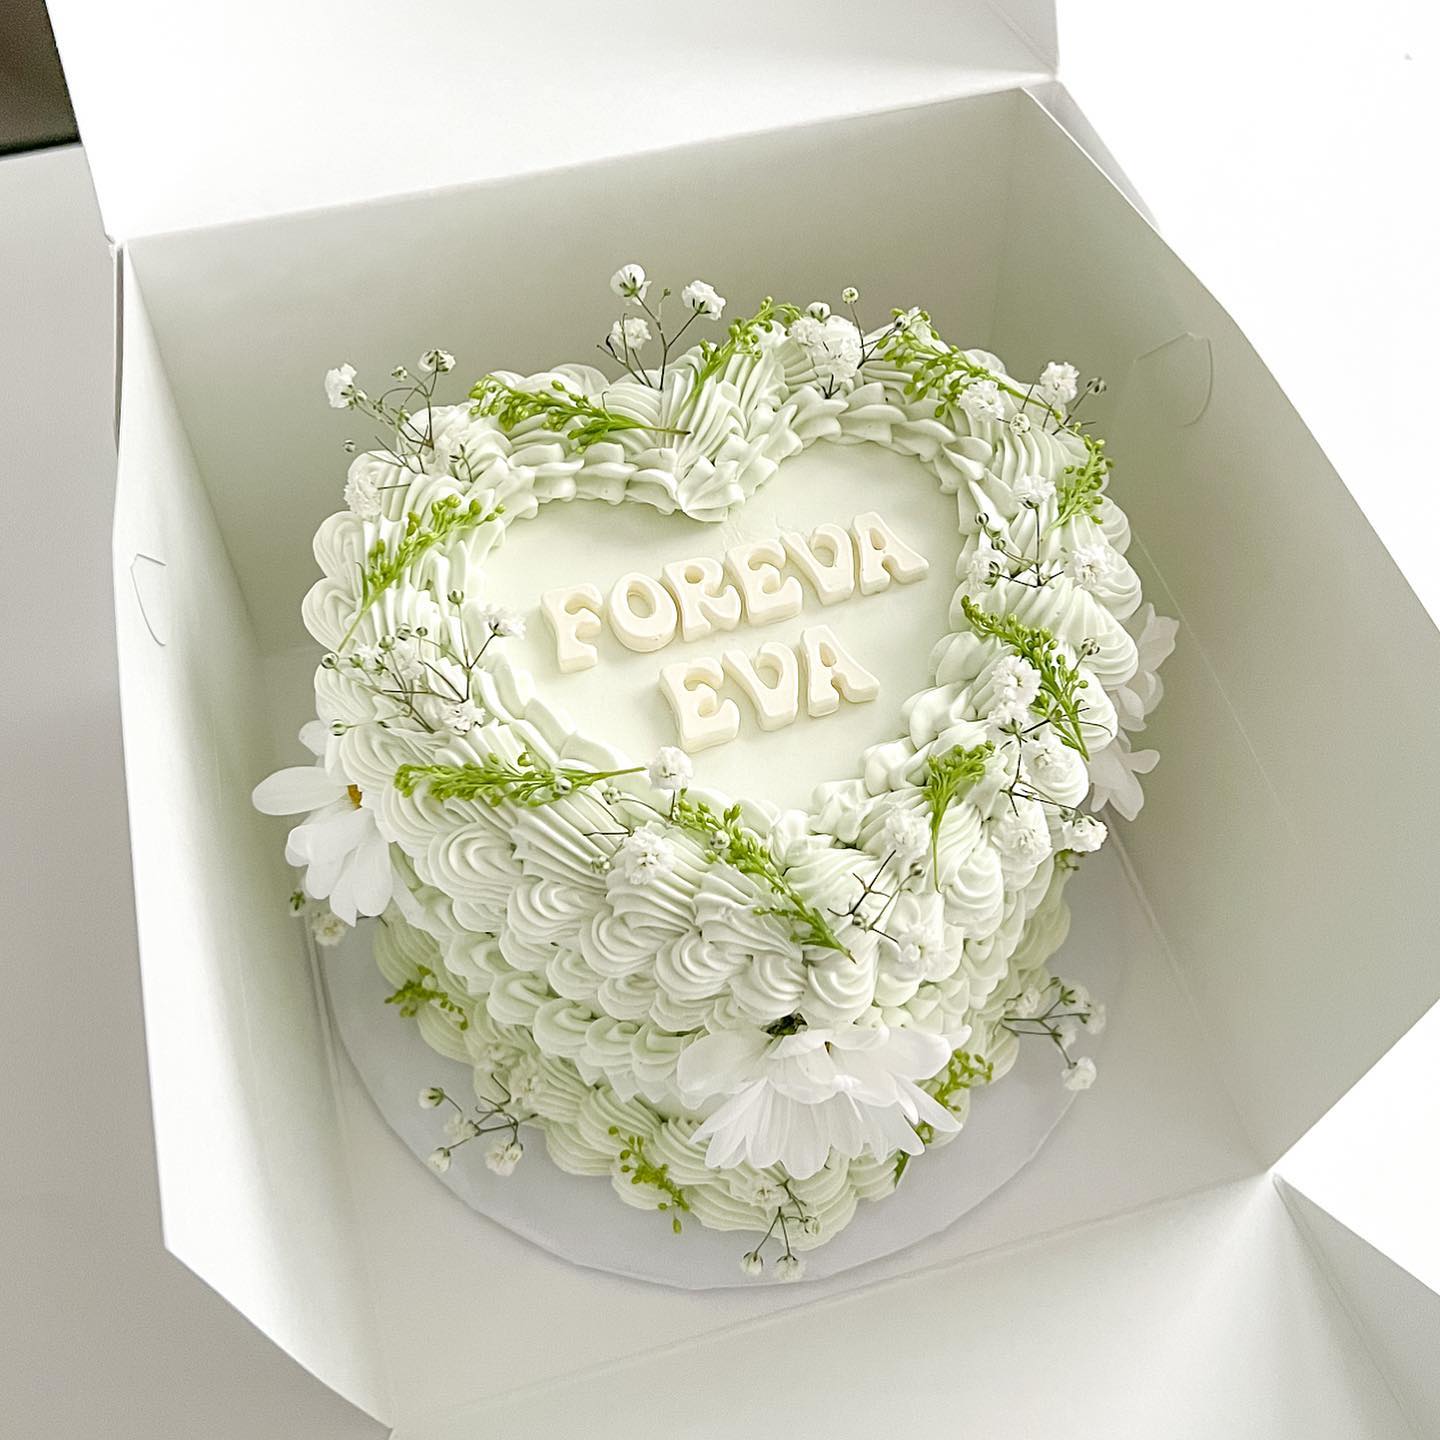 simple vintage heart shaped wedding cake via bakedbyjulie